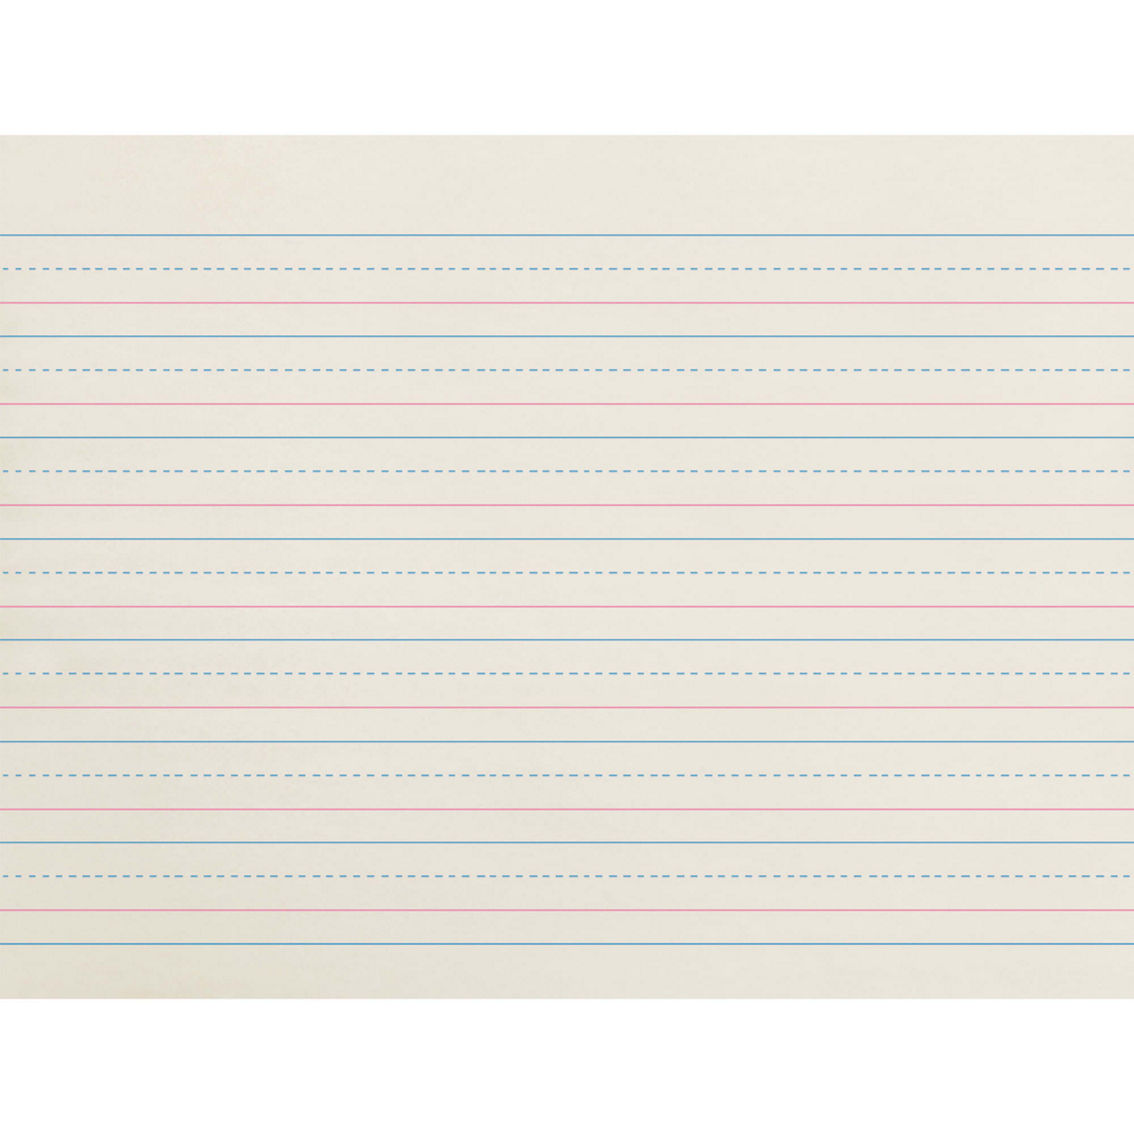 Zaner-Bloser® Newsprint Handwriting Paper, Dotted Midline, 500 Per Pack, 3 Packs - Image 2 of 3